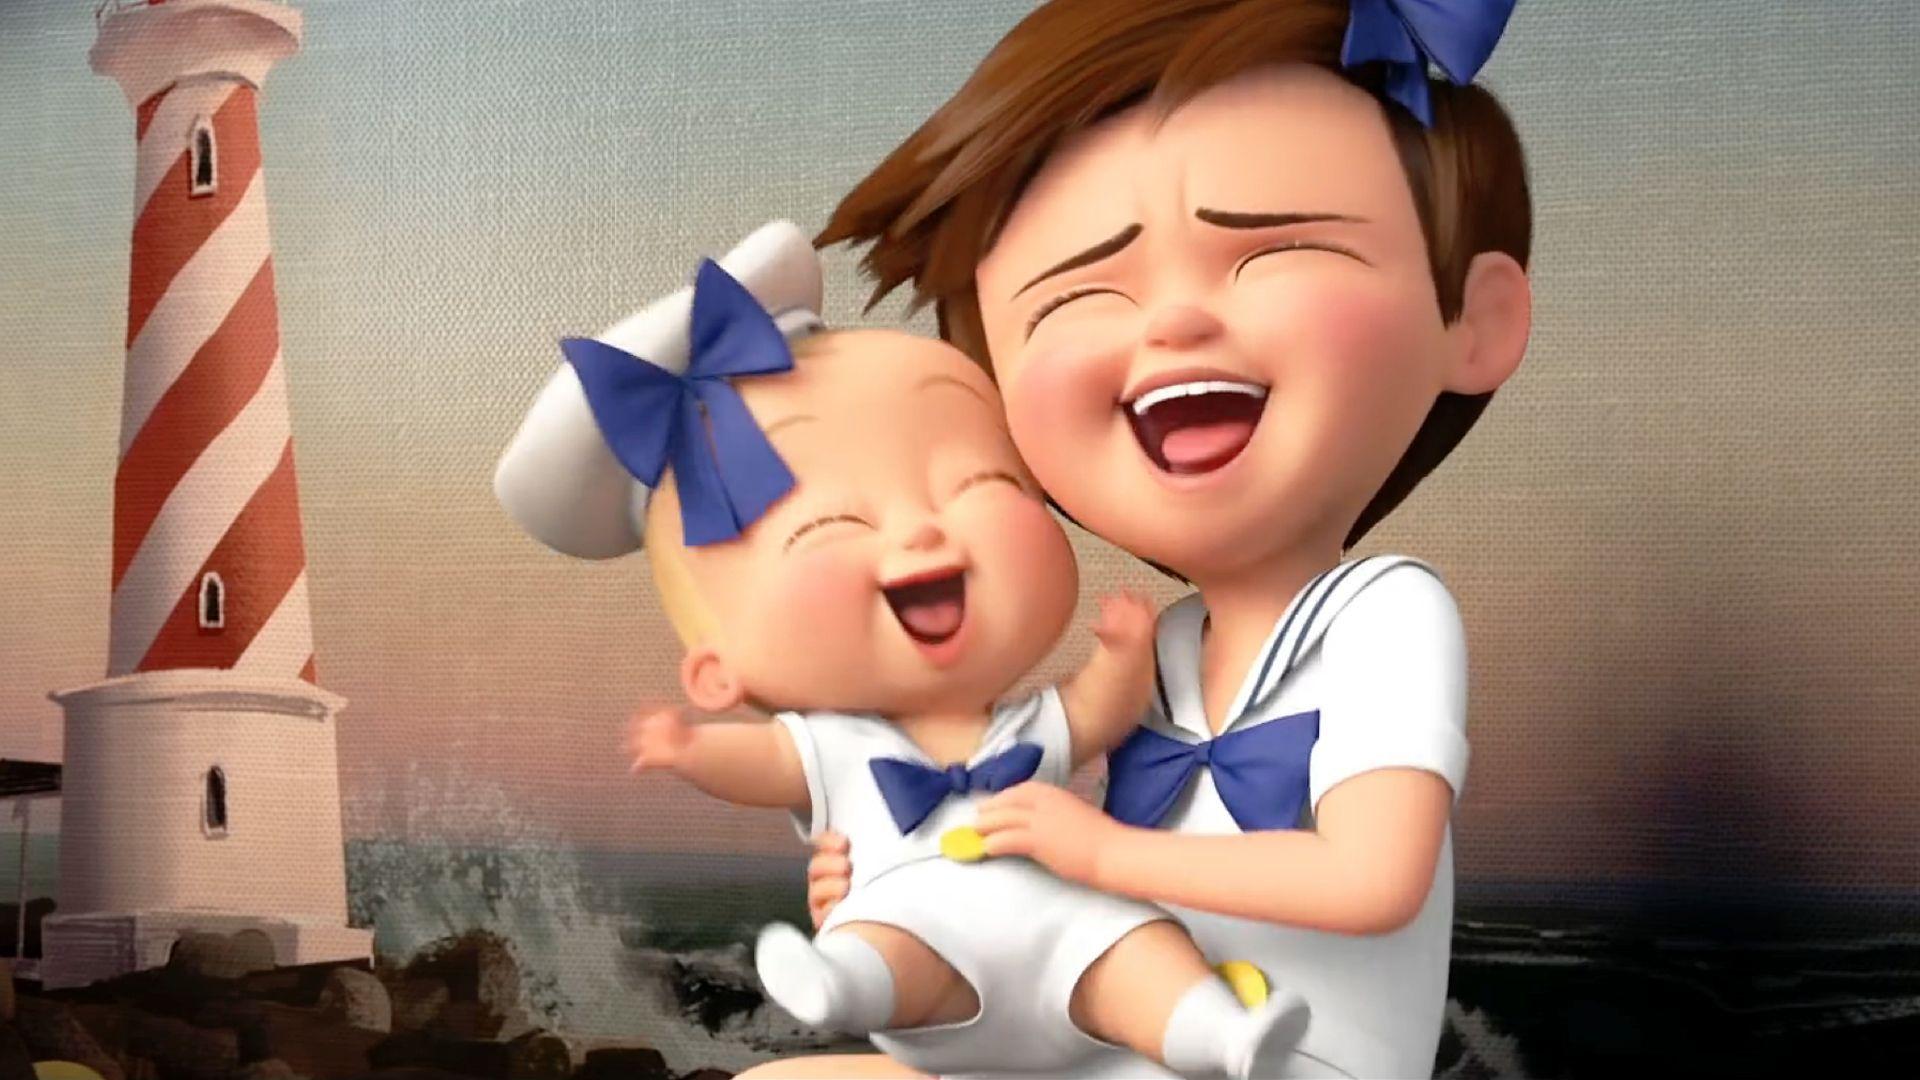 The Boss Baby Movie th Century Fox On Digital HD July th. Baby movie, Boss baby, Cute baby wallpaper